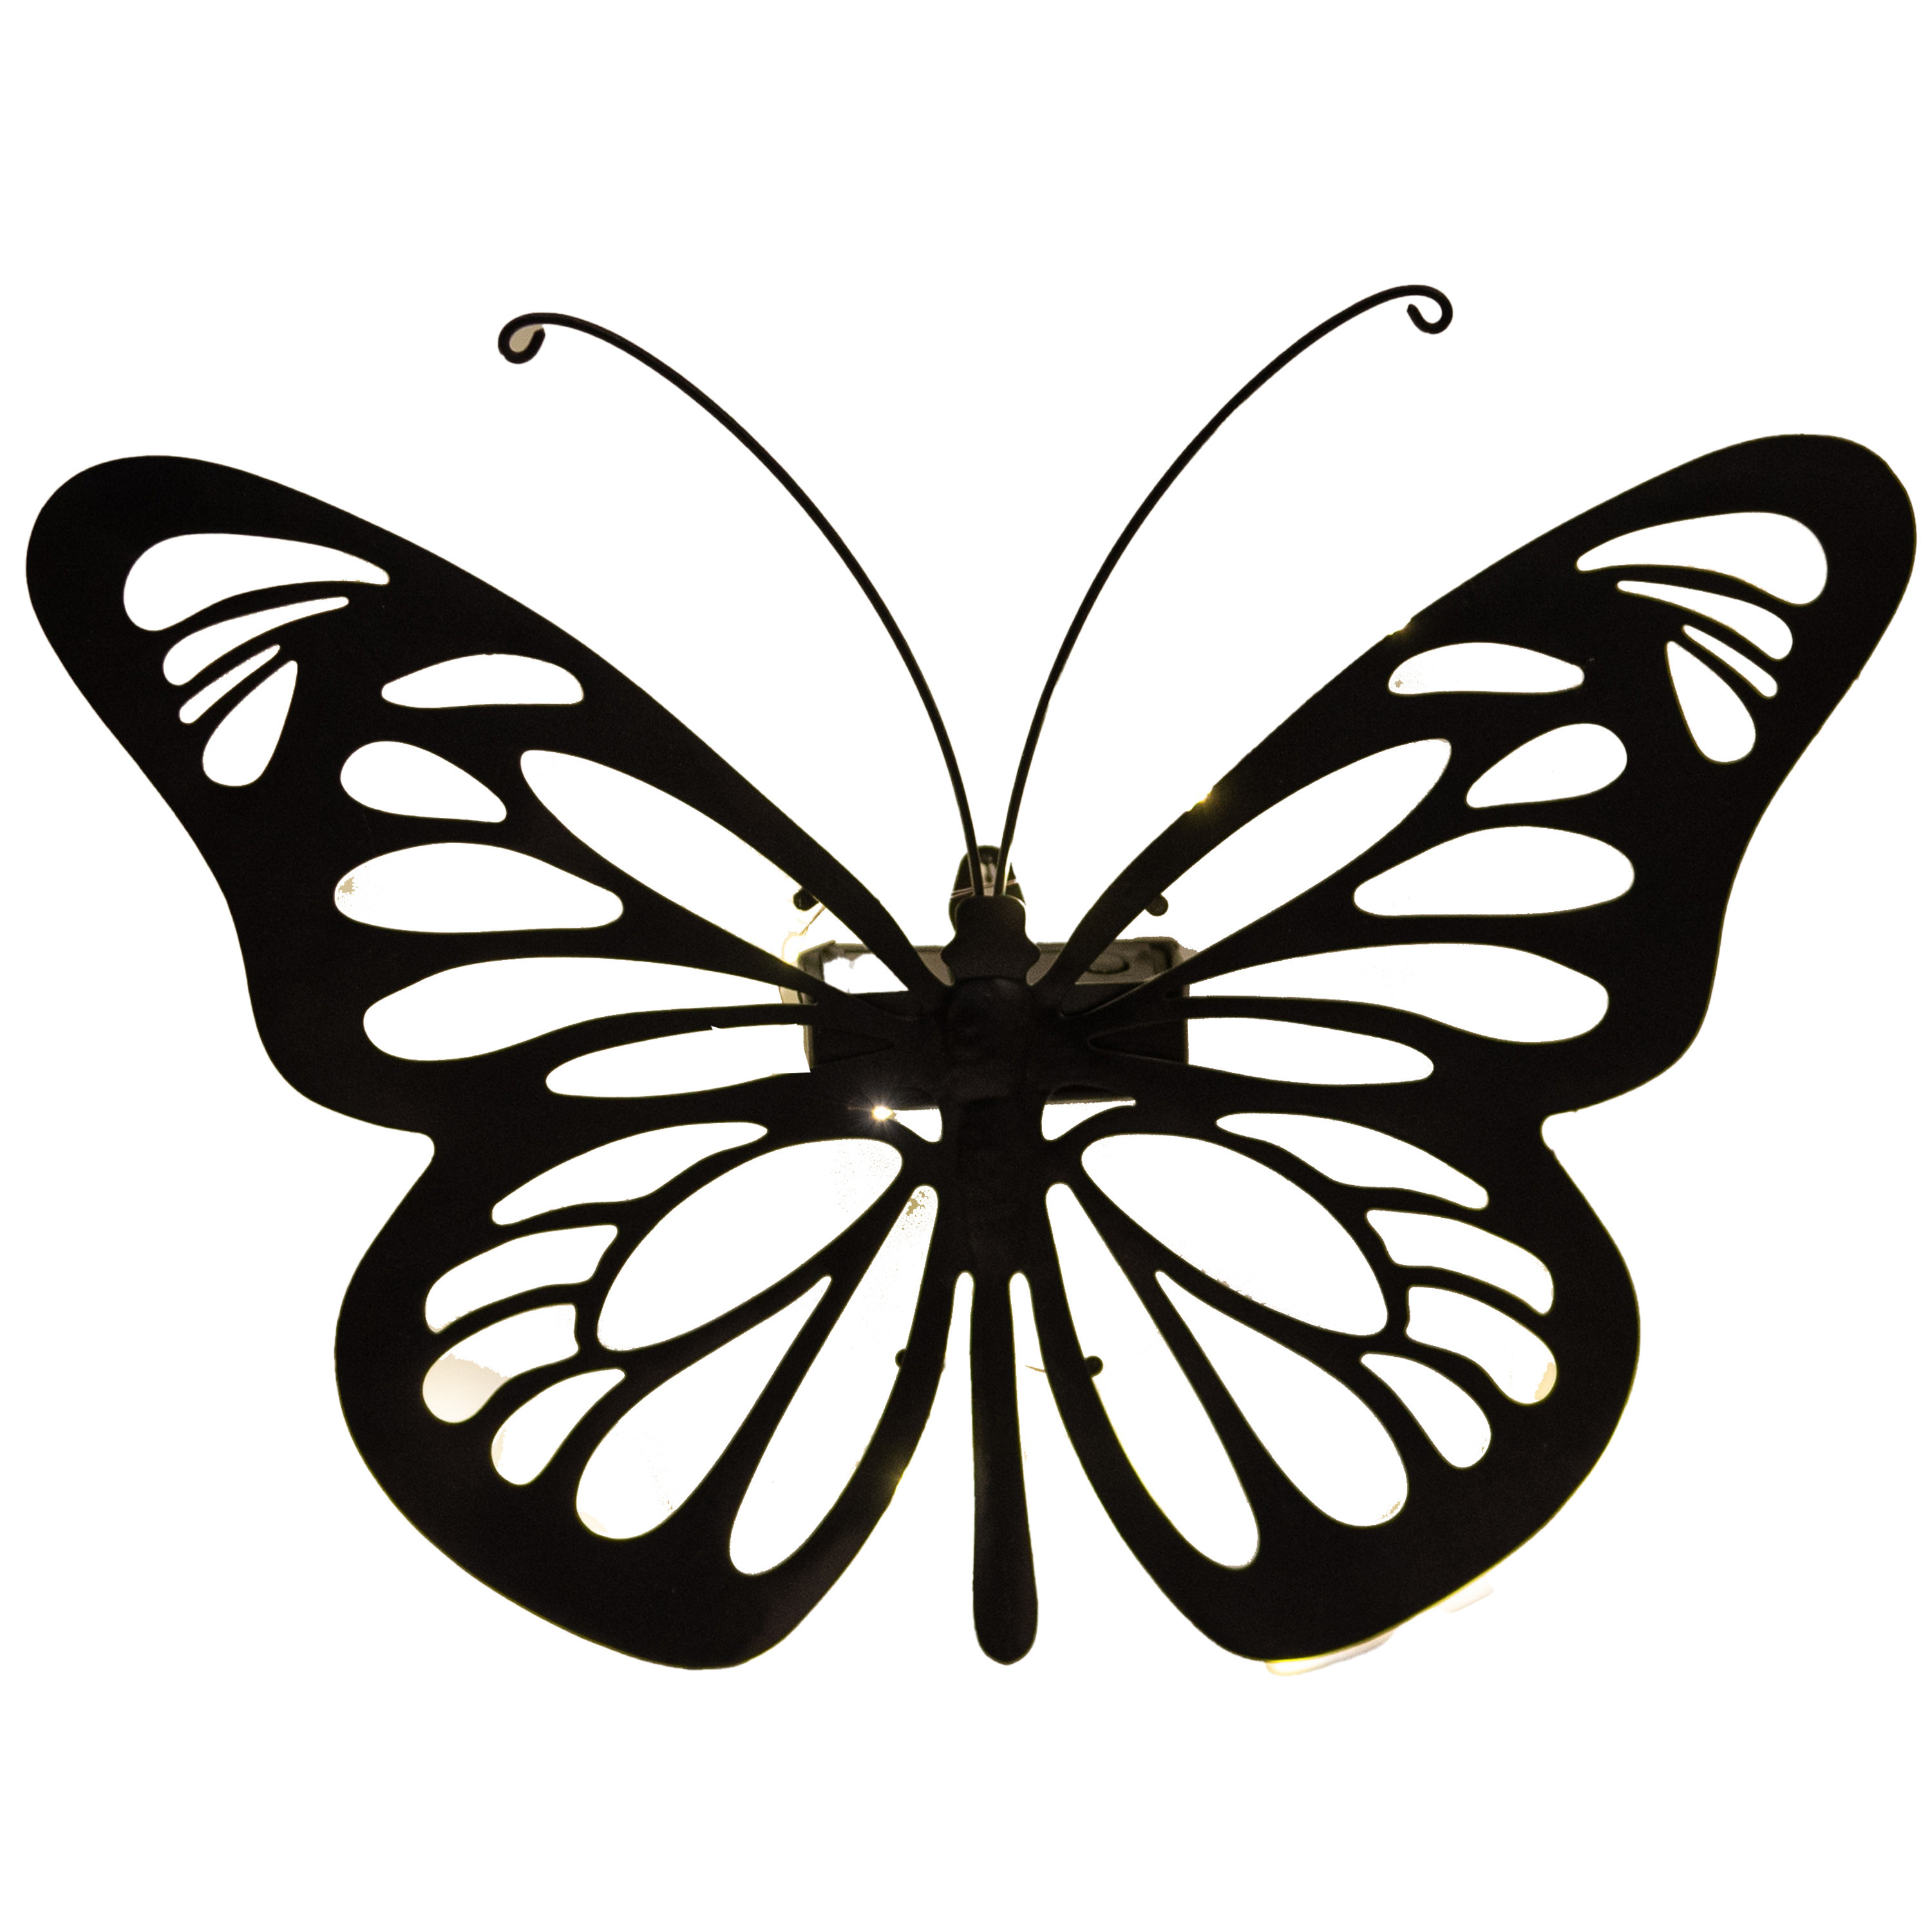 Solar wandlamp vlinder 25 x 35 cm metaal tuinverlichting